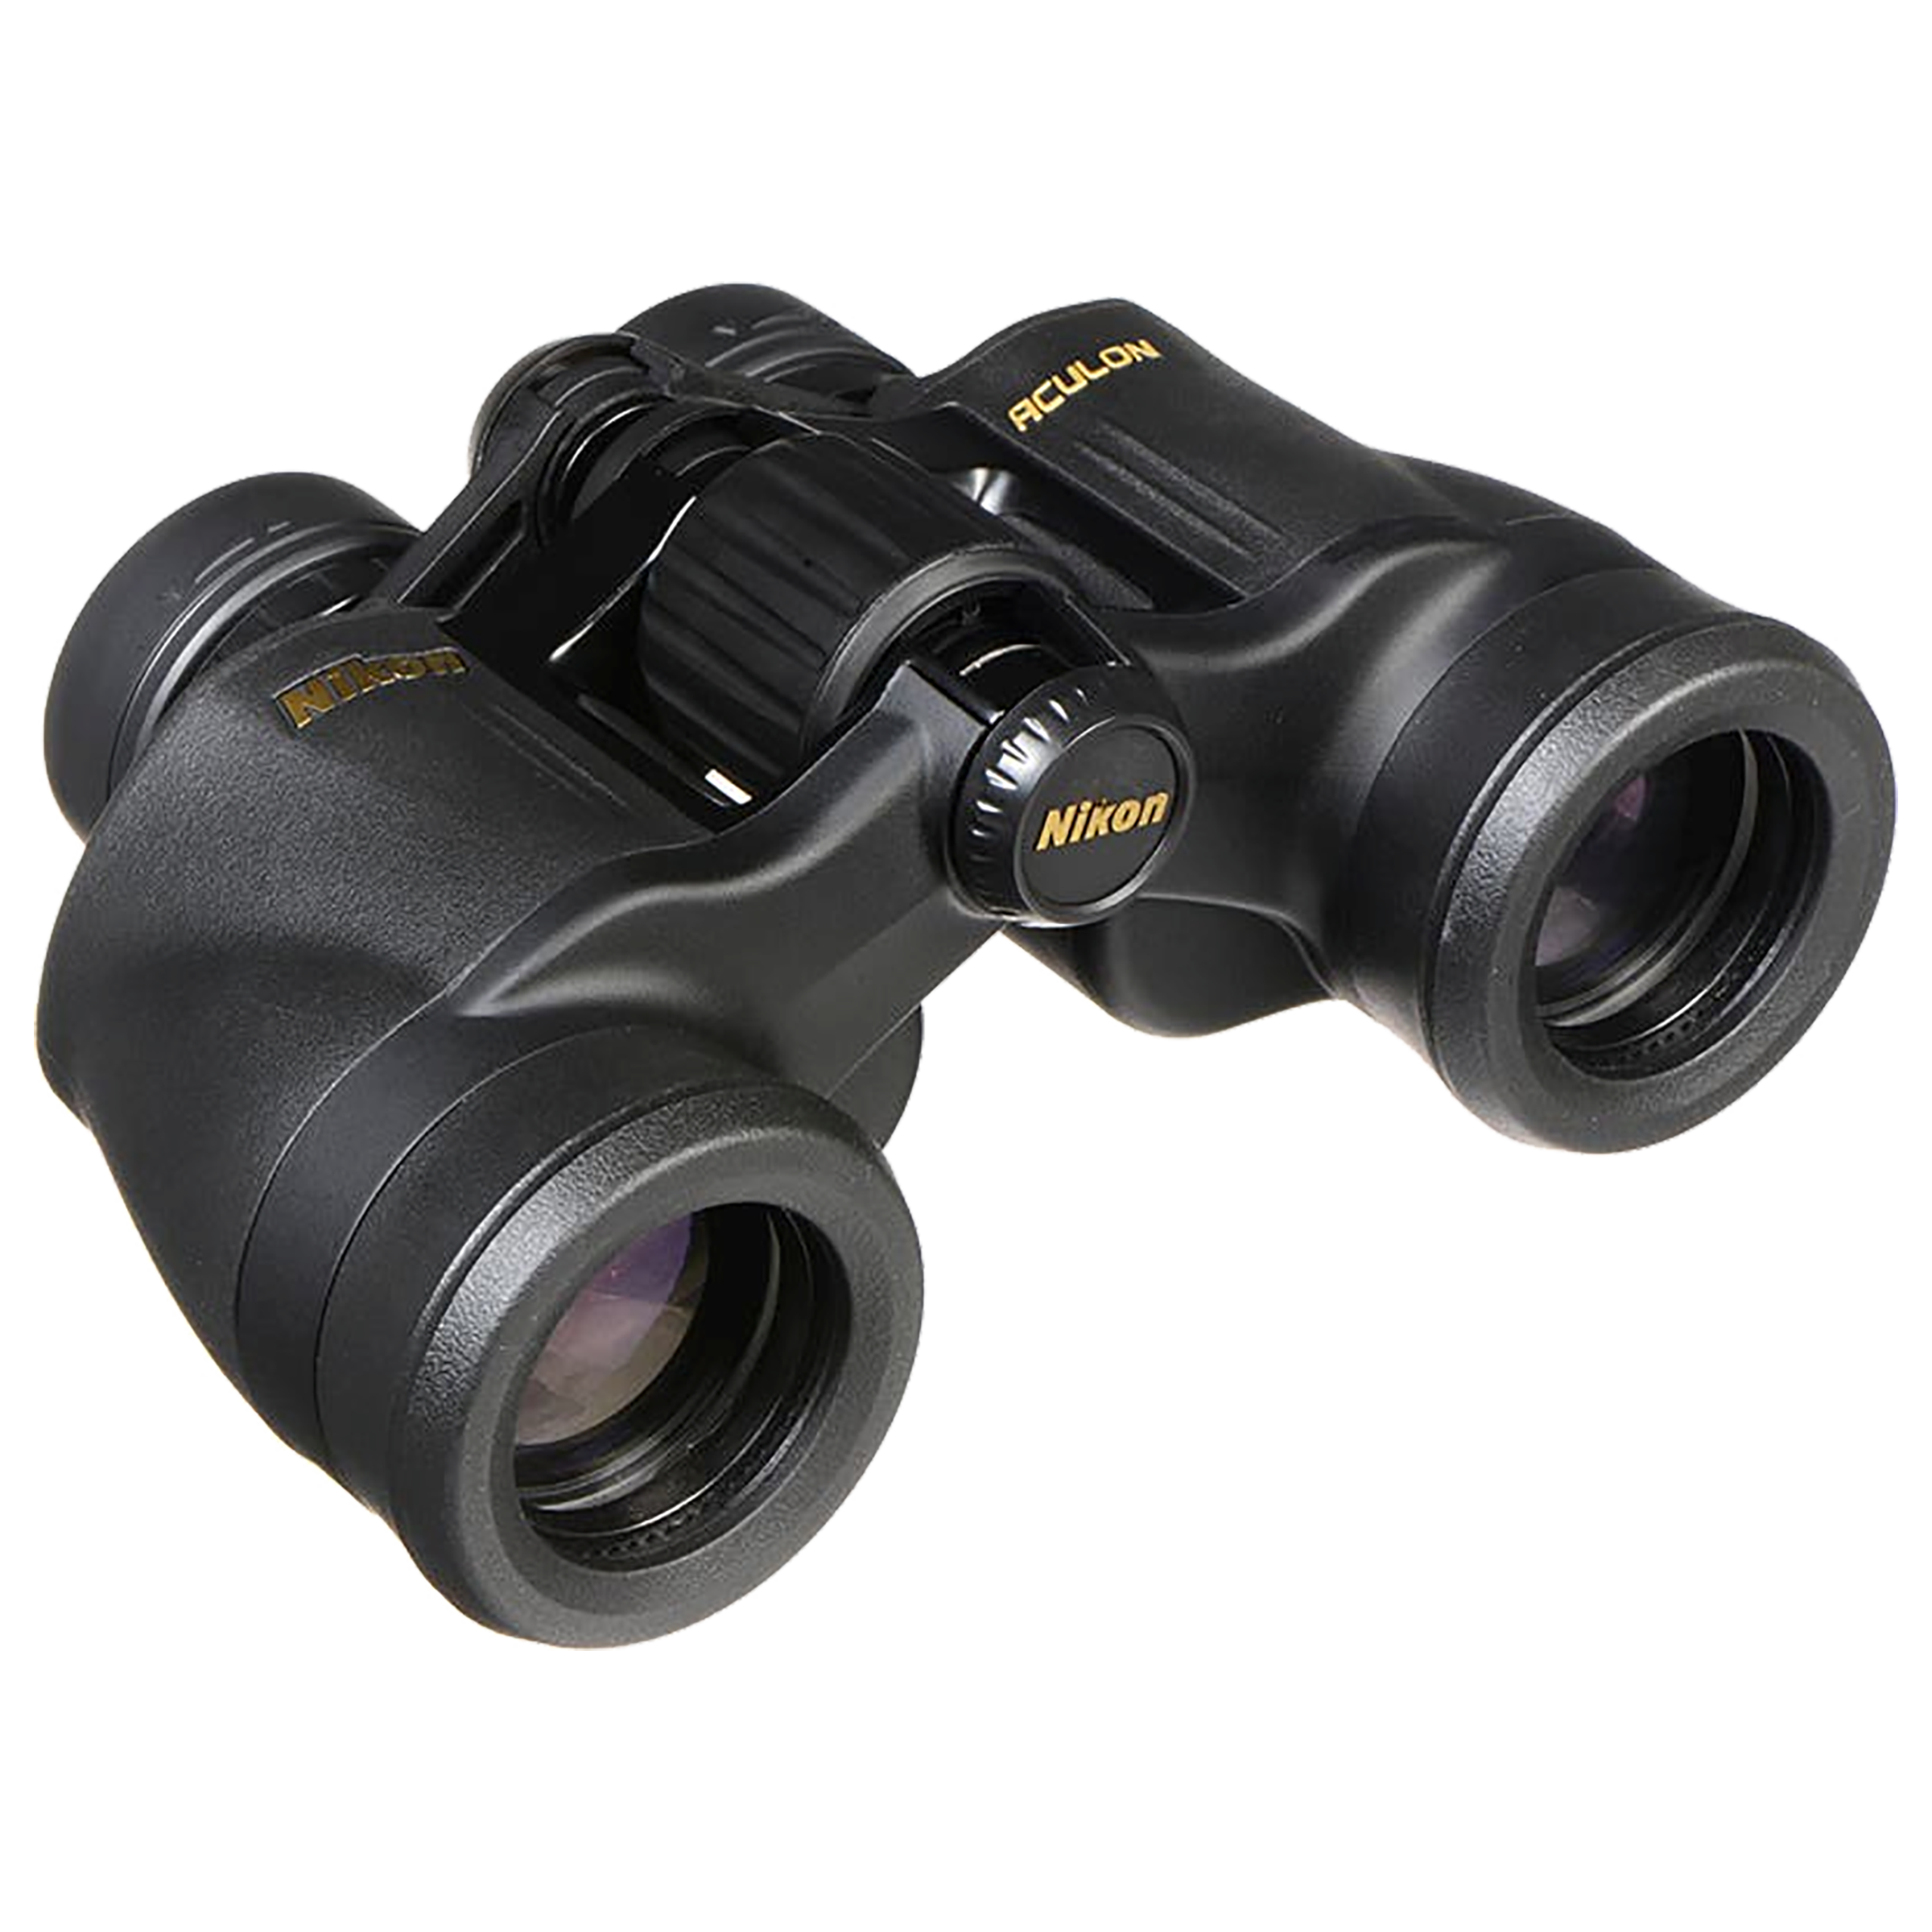 Nikon Aculon A211 7x 35mm Porro Prism Optical Binoculars (Aspherical Eyepiece Lenses, BAA810SA, Black)_1